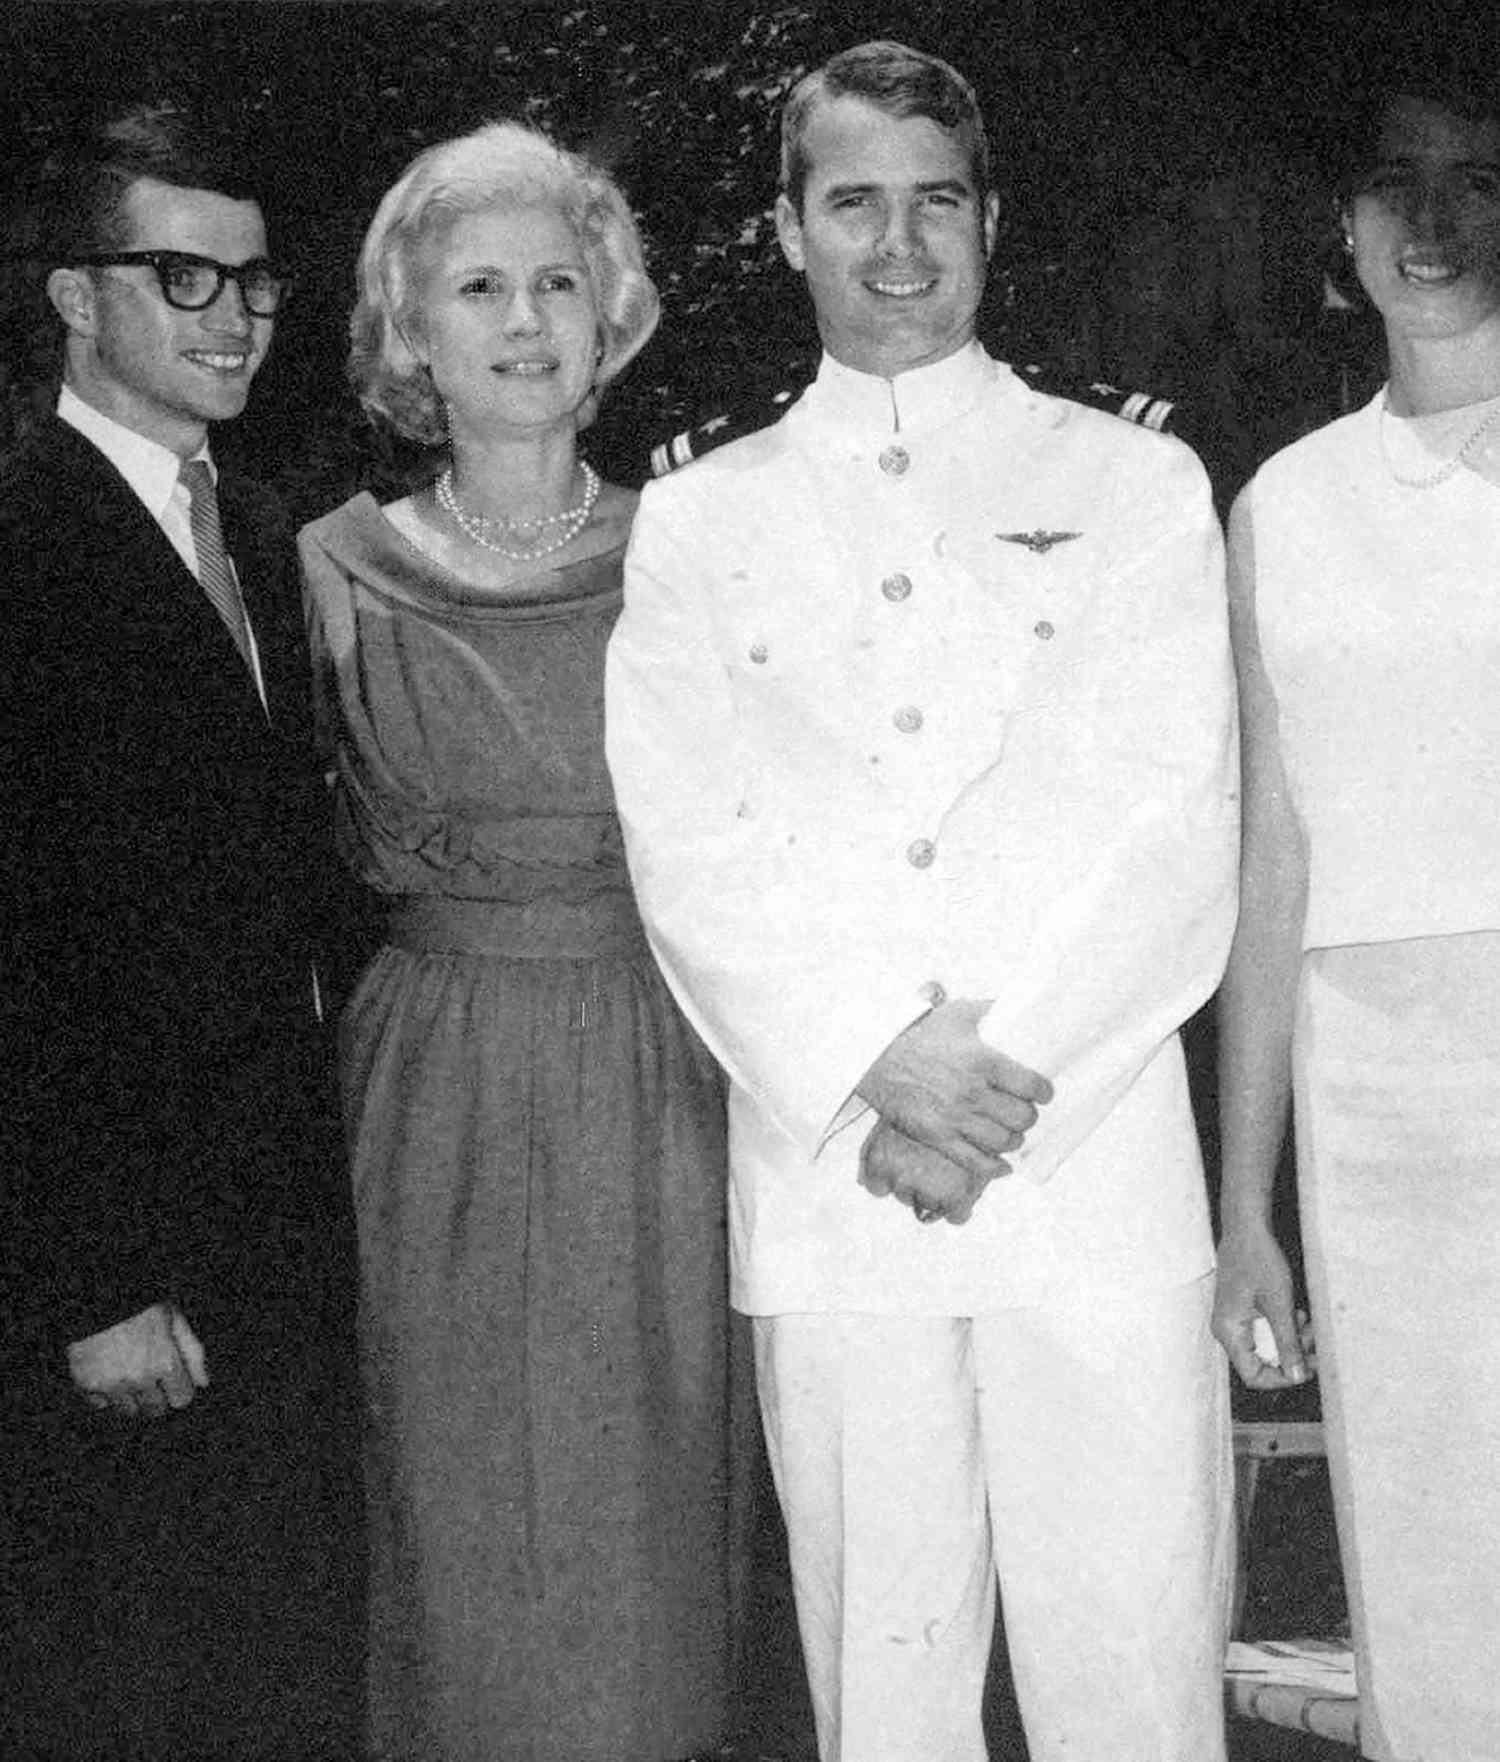 Senator John McCain family portraits, America